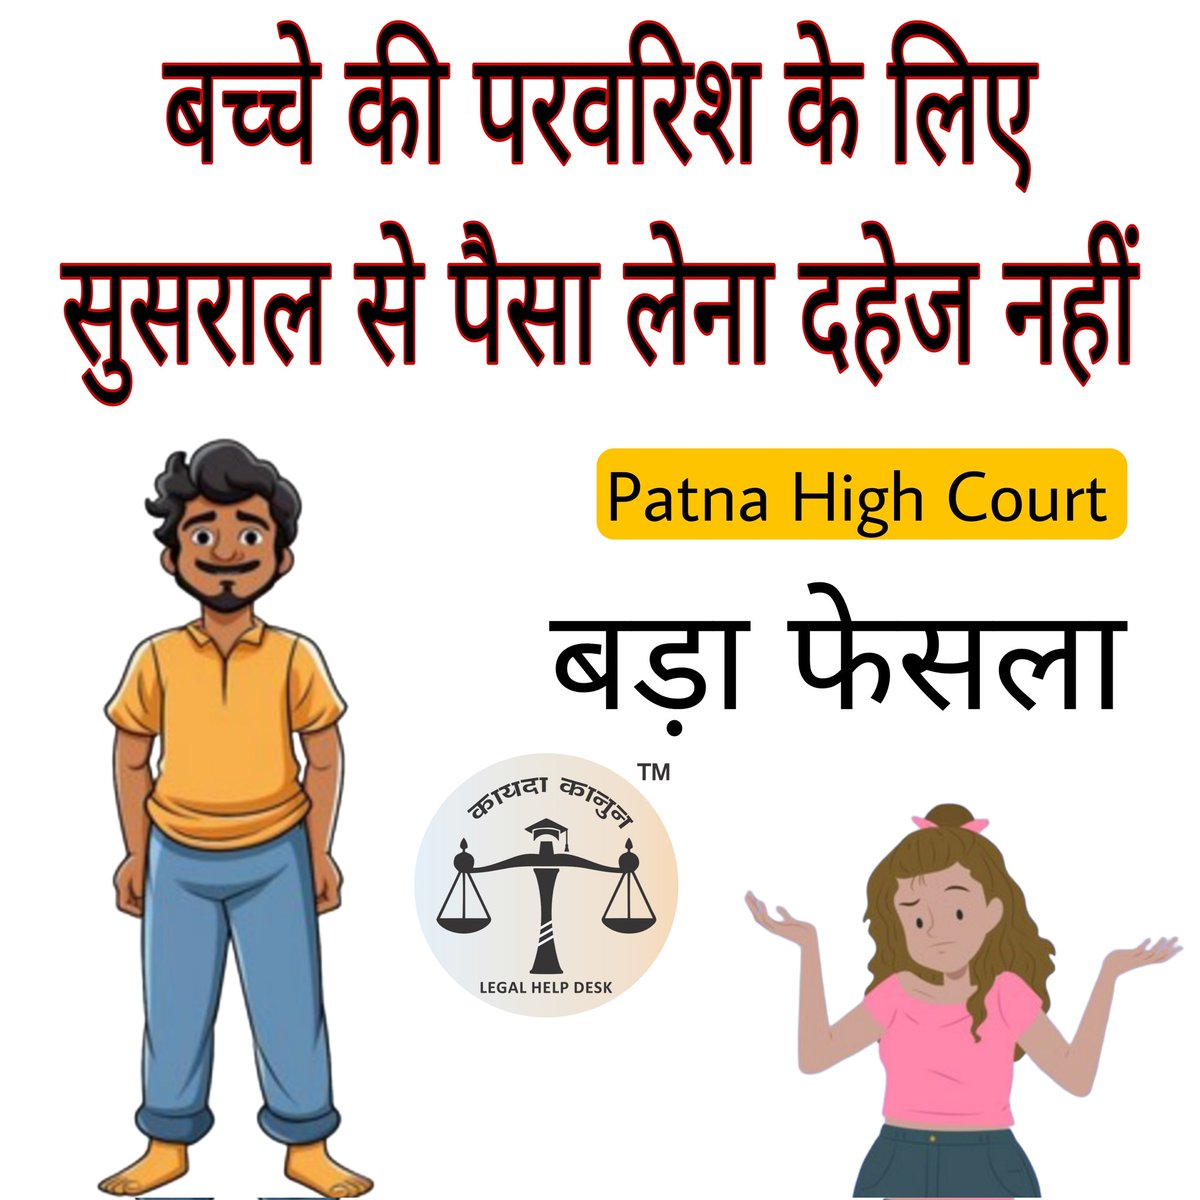 82% दहेज के जूठे केस दर्ज किए जाते है 

#patnahighcourt #court #courtorder #judgmentoftheday #judgment #courtnews #lawnews #law #india #lawinindia #lawchannel #lawyer #advomsharma #kaydakanoonhelpdesk